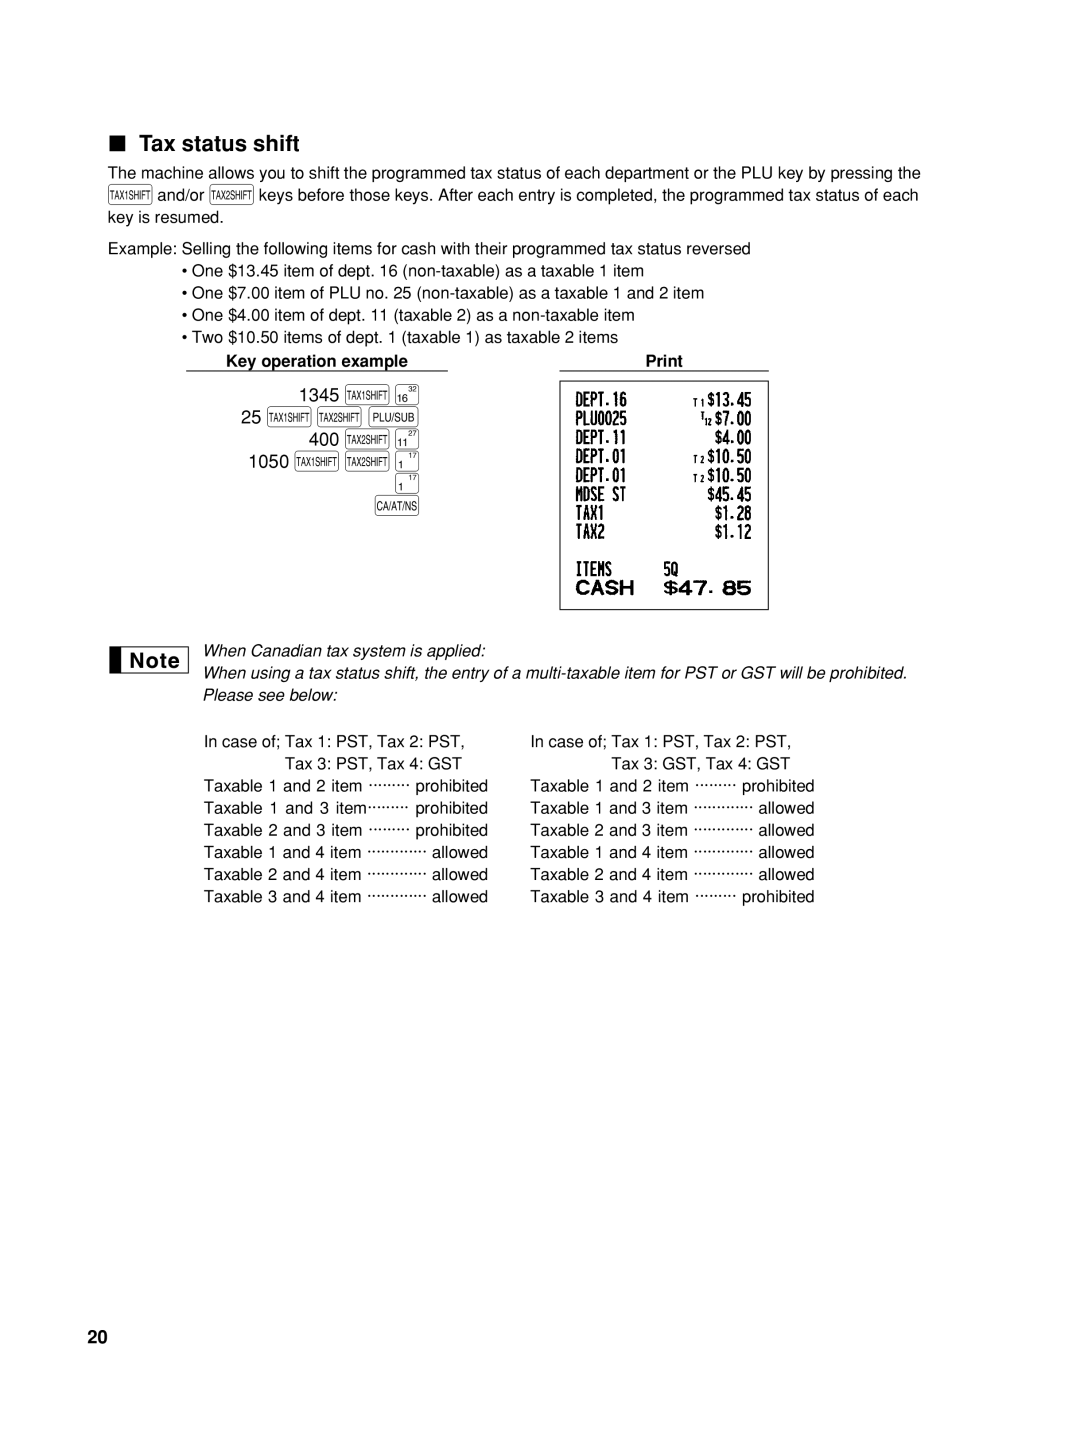 Sharp TINSZ2600RCZZ instruction manual TUp 400 U, Tax status shift, 1345 T, 1050 TU, Key operation example, Print 